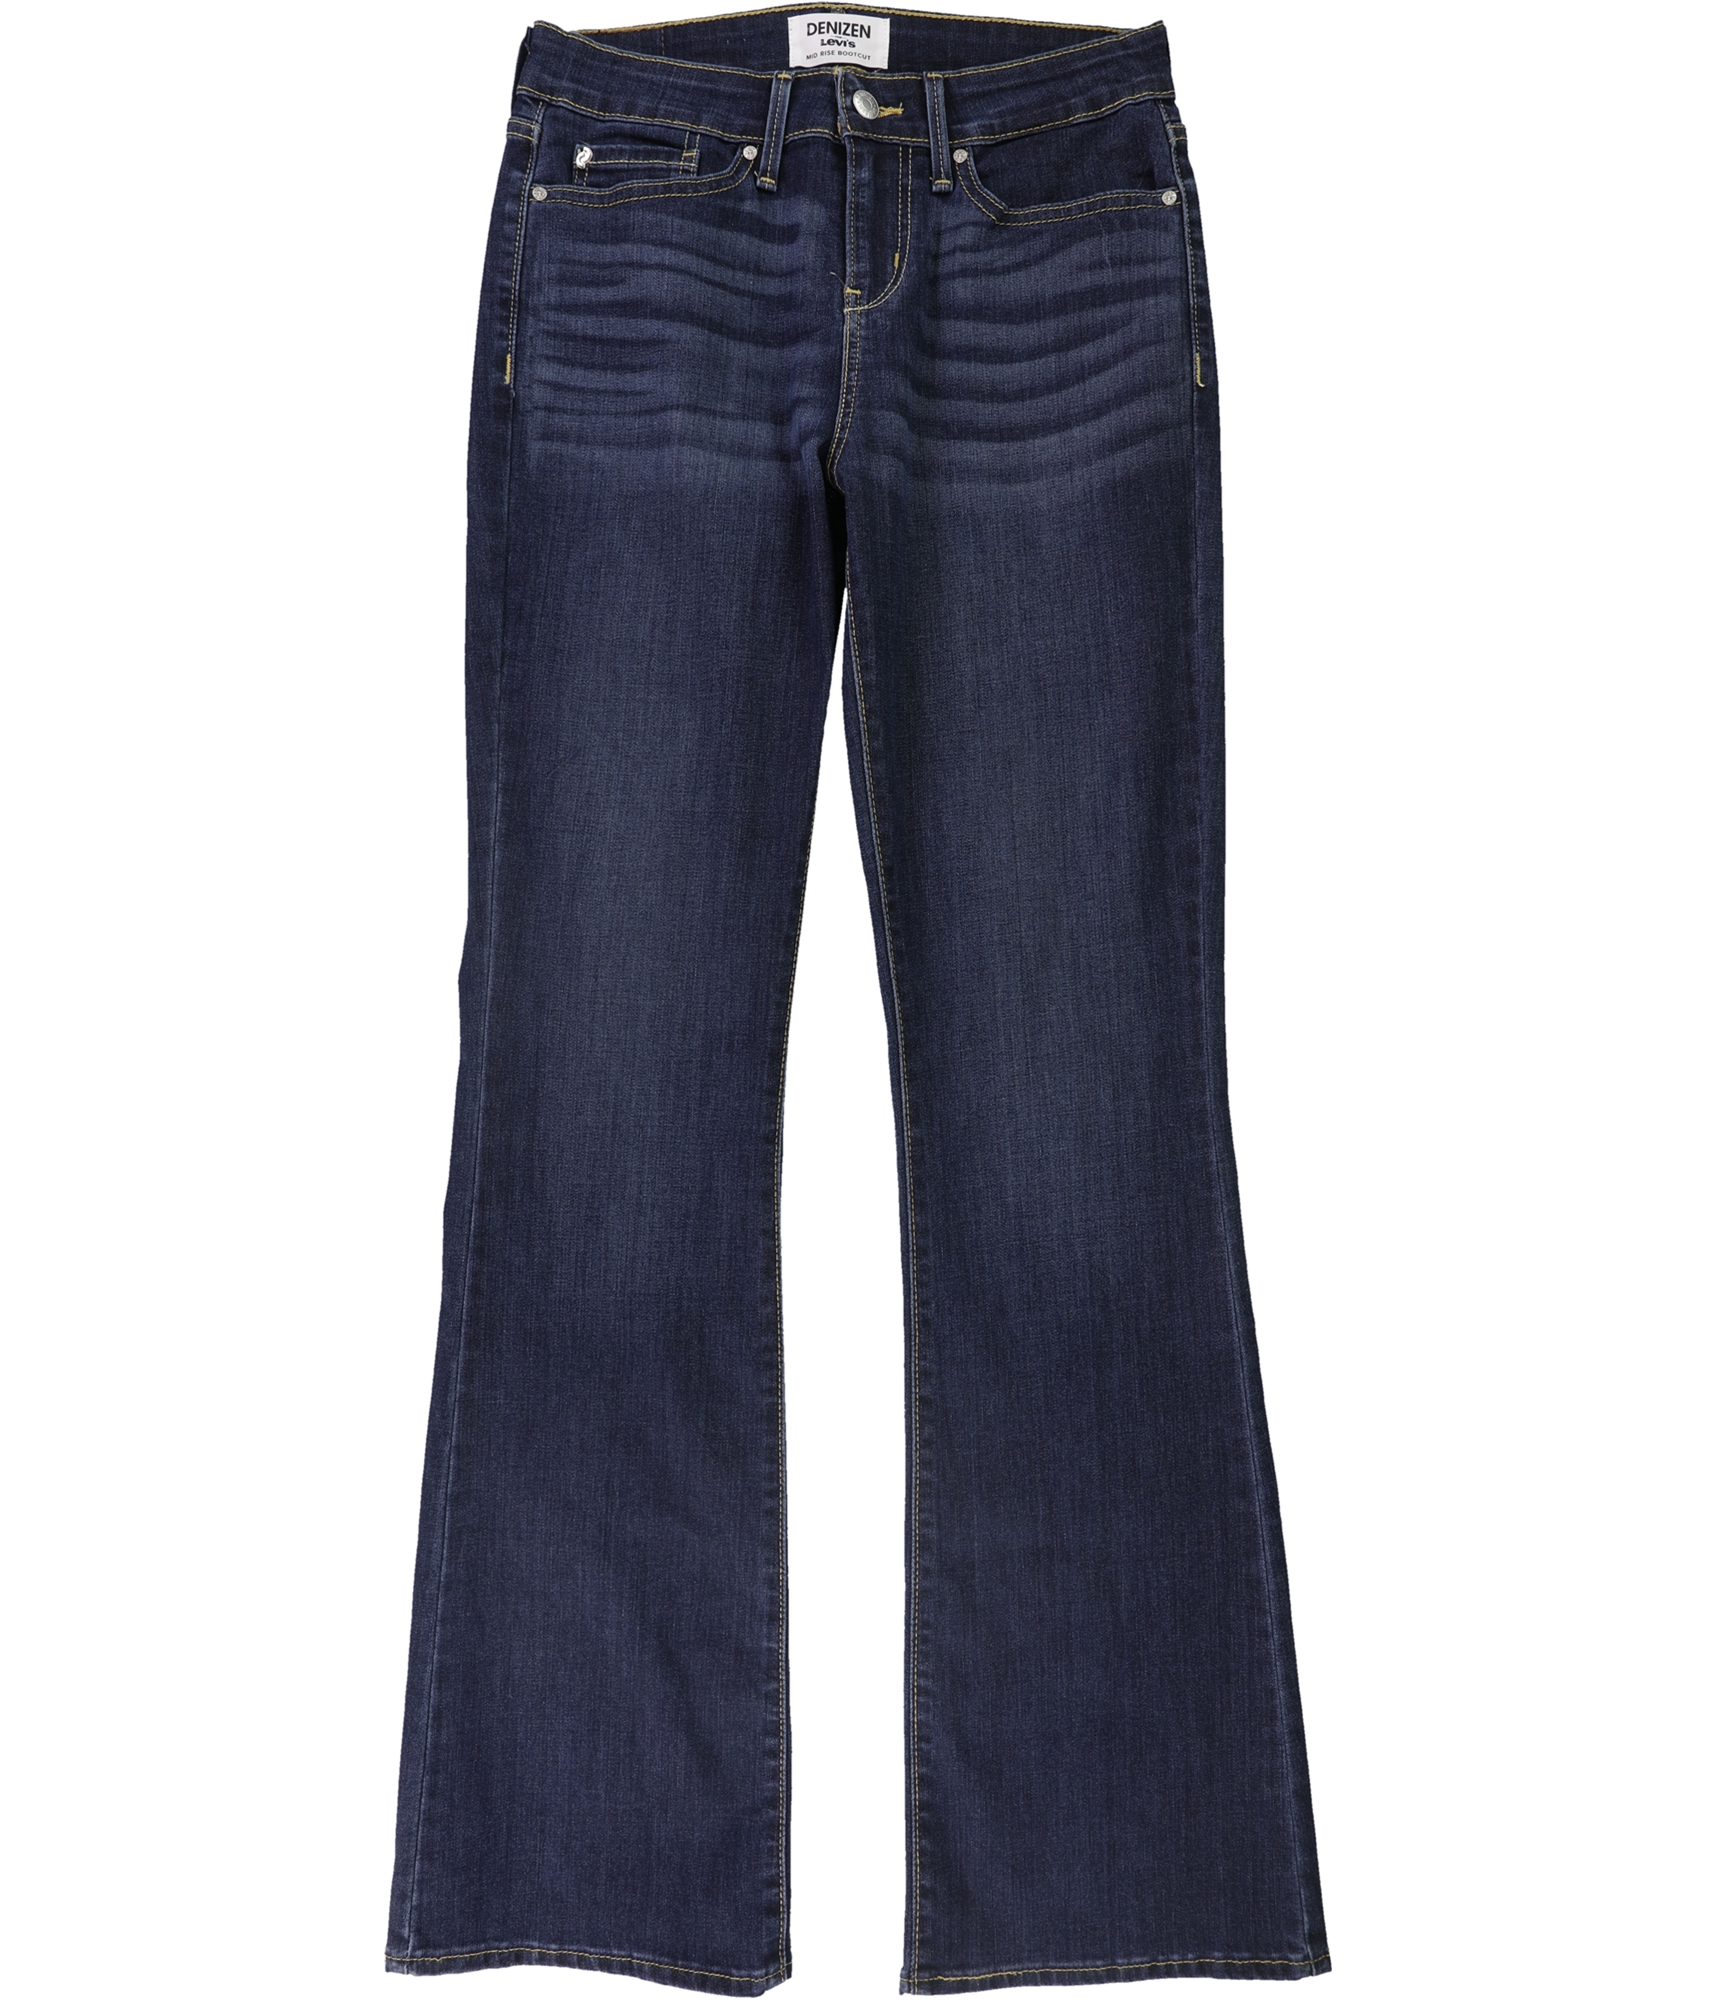 Denizen Womens Mid Rise Boot Cut Jeans, Blue, 27 | eBay